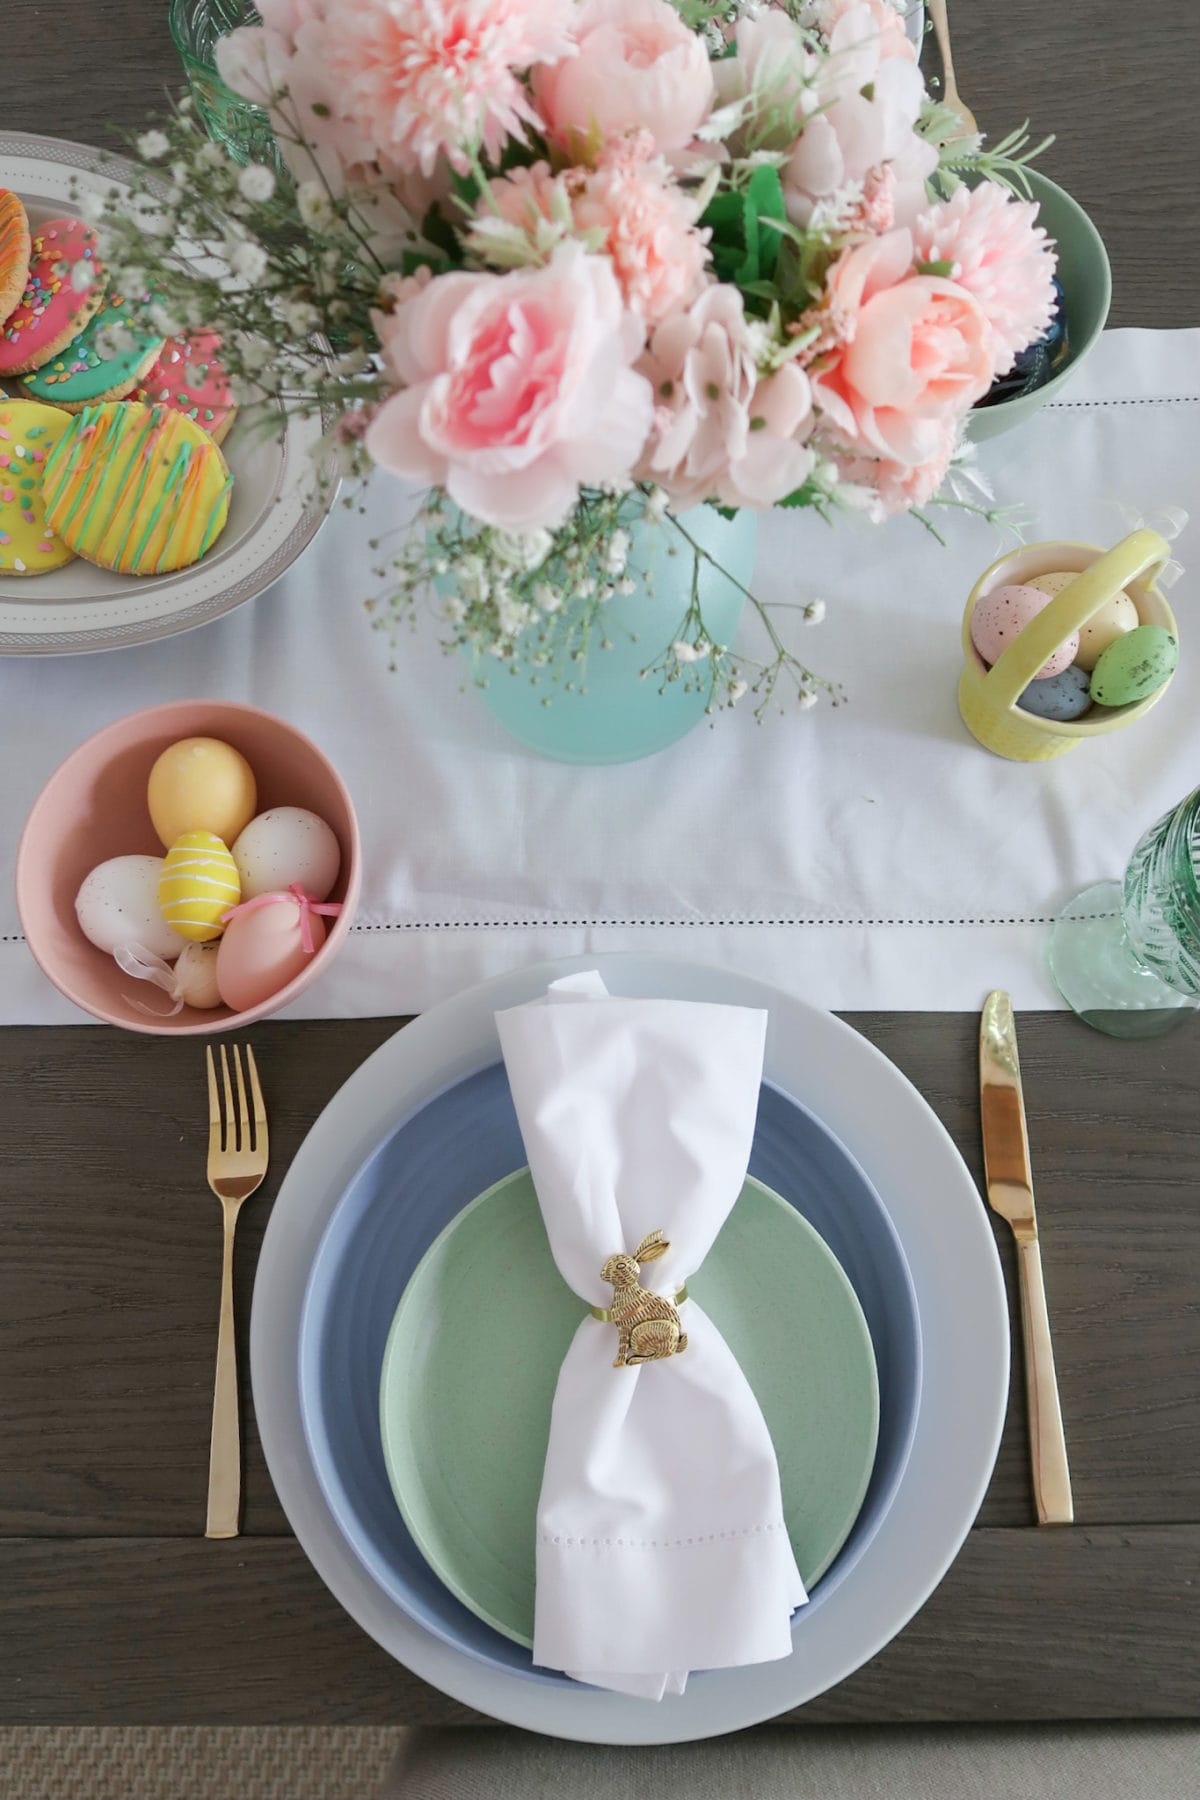 Spring Decor, Flowers, Table Runner, Pastel Plates, Bunny Napkin rings, Gold Flatware 